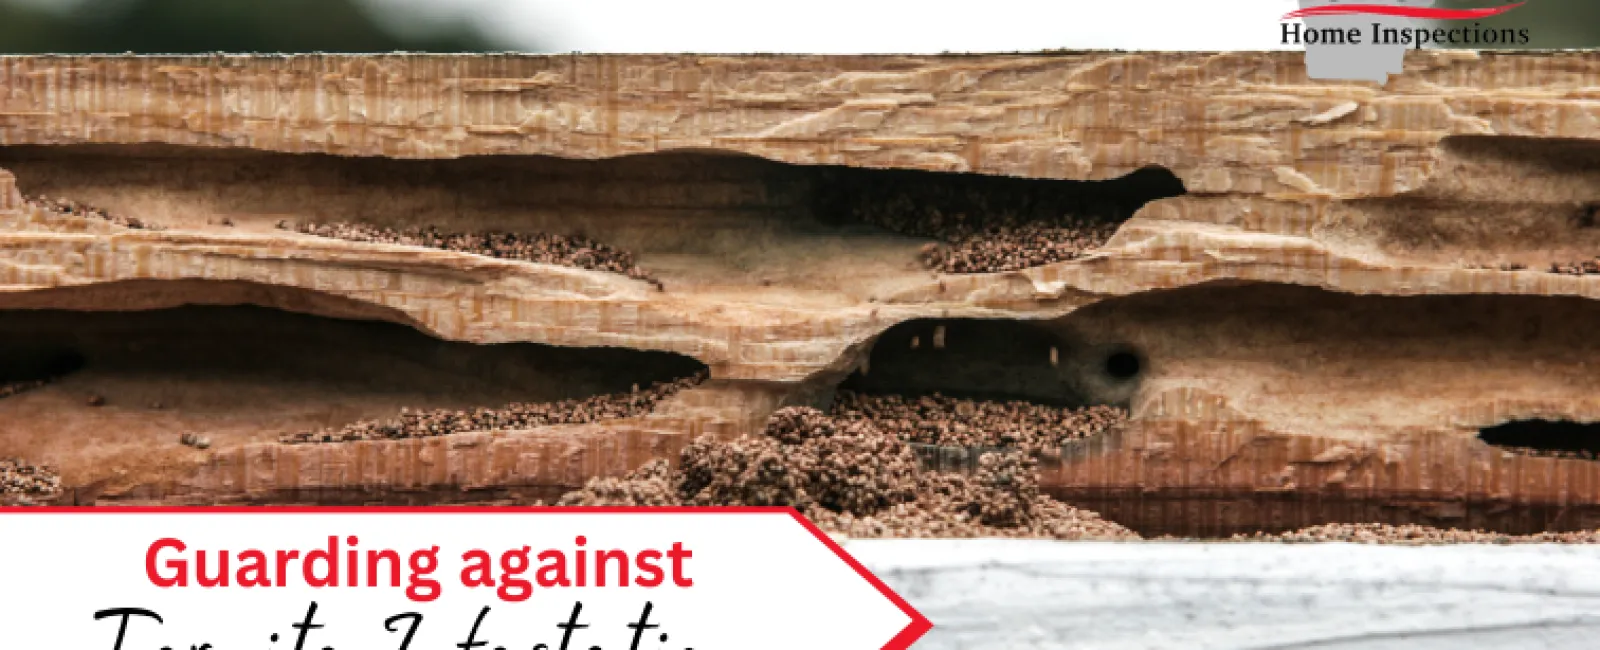 Guarding Against Termite Infestation